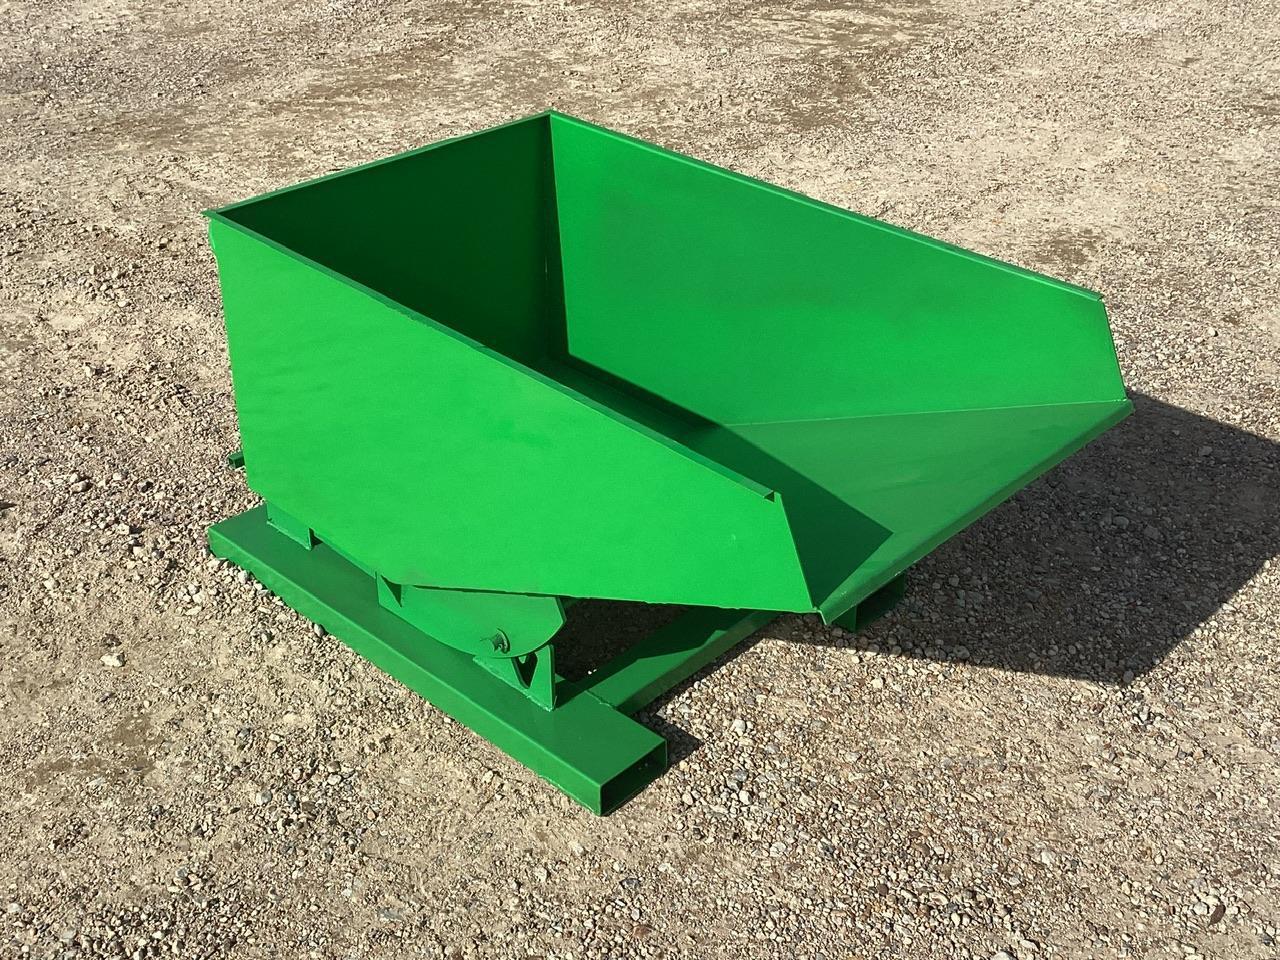 Green Self-Dumping Hopper